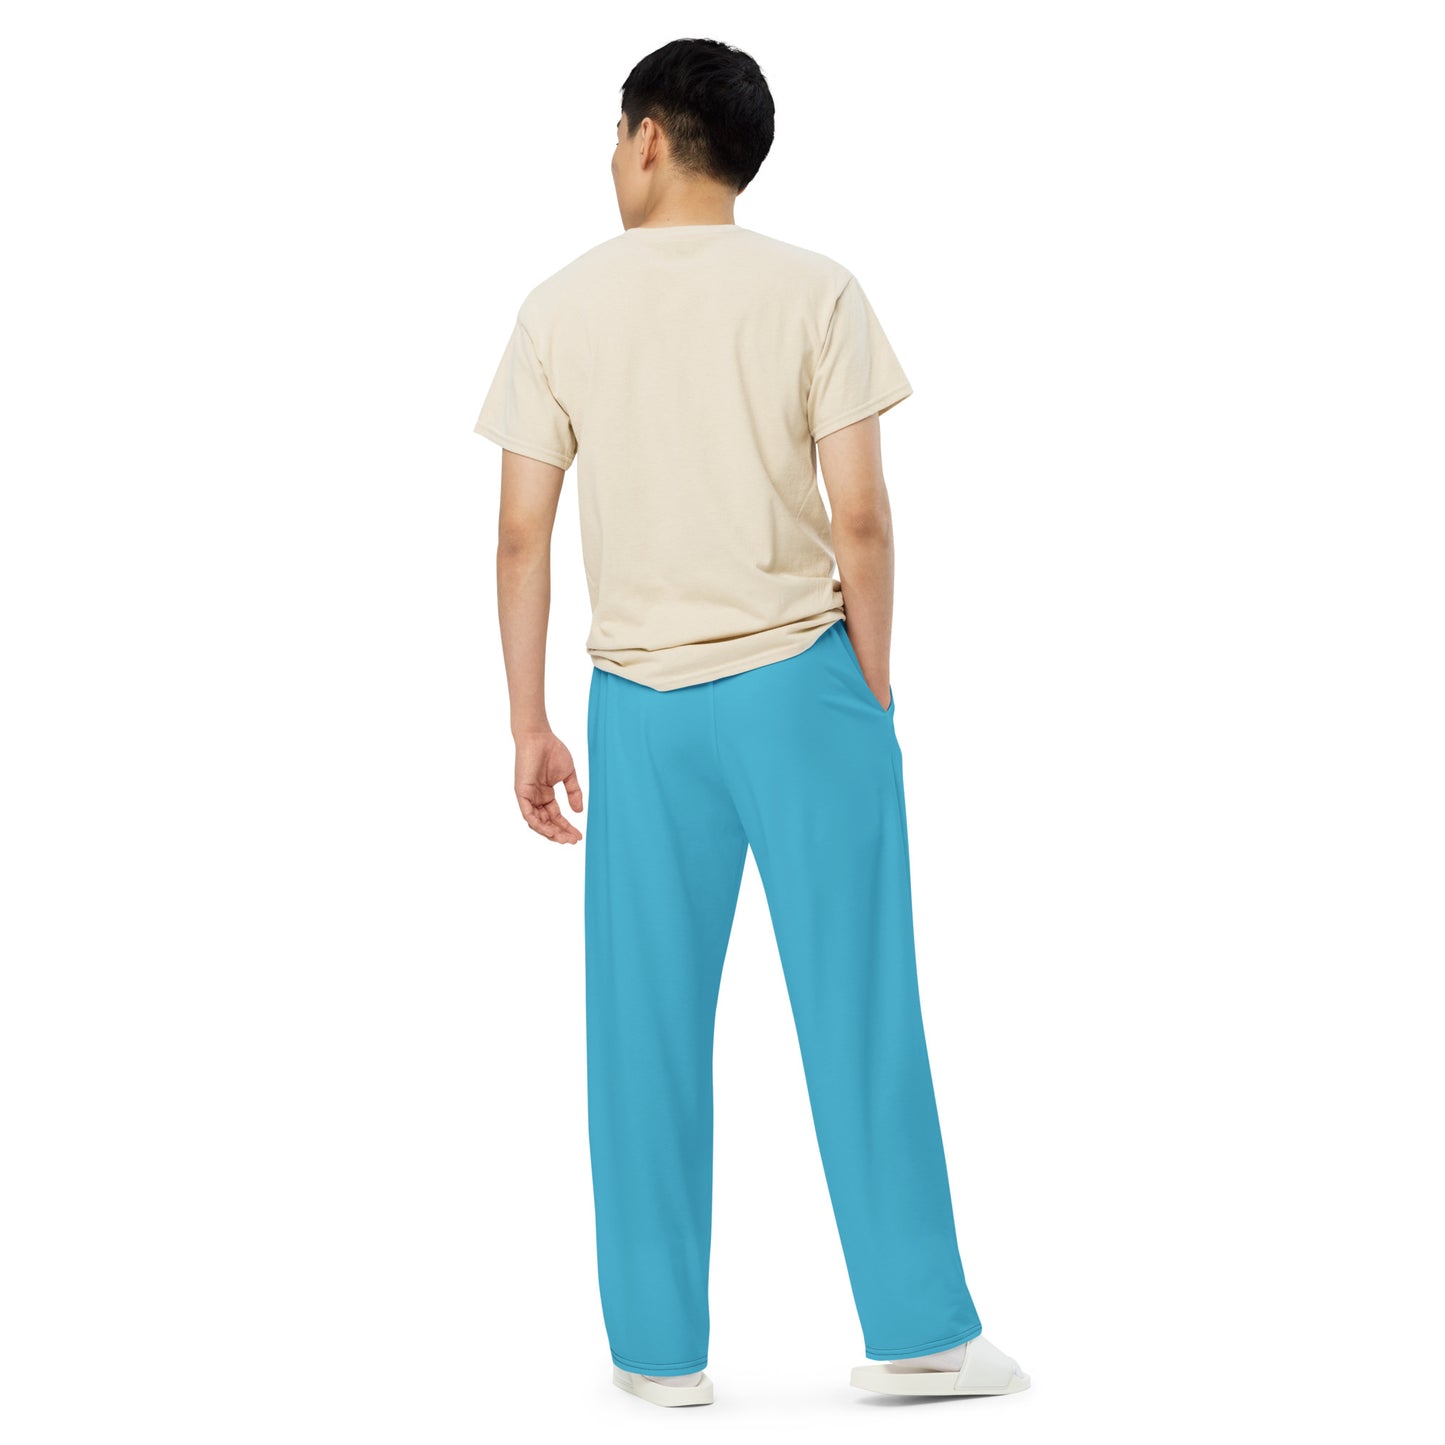 Turquoise Accent wide-leg pants